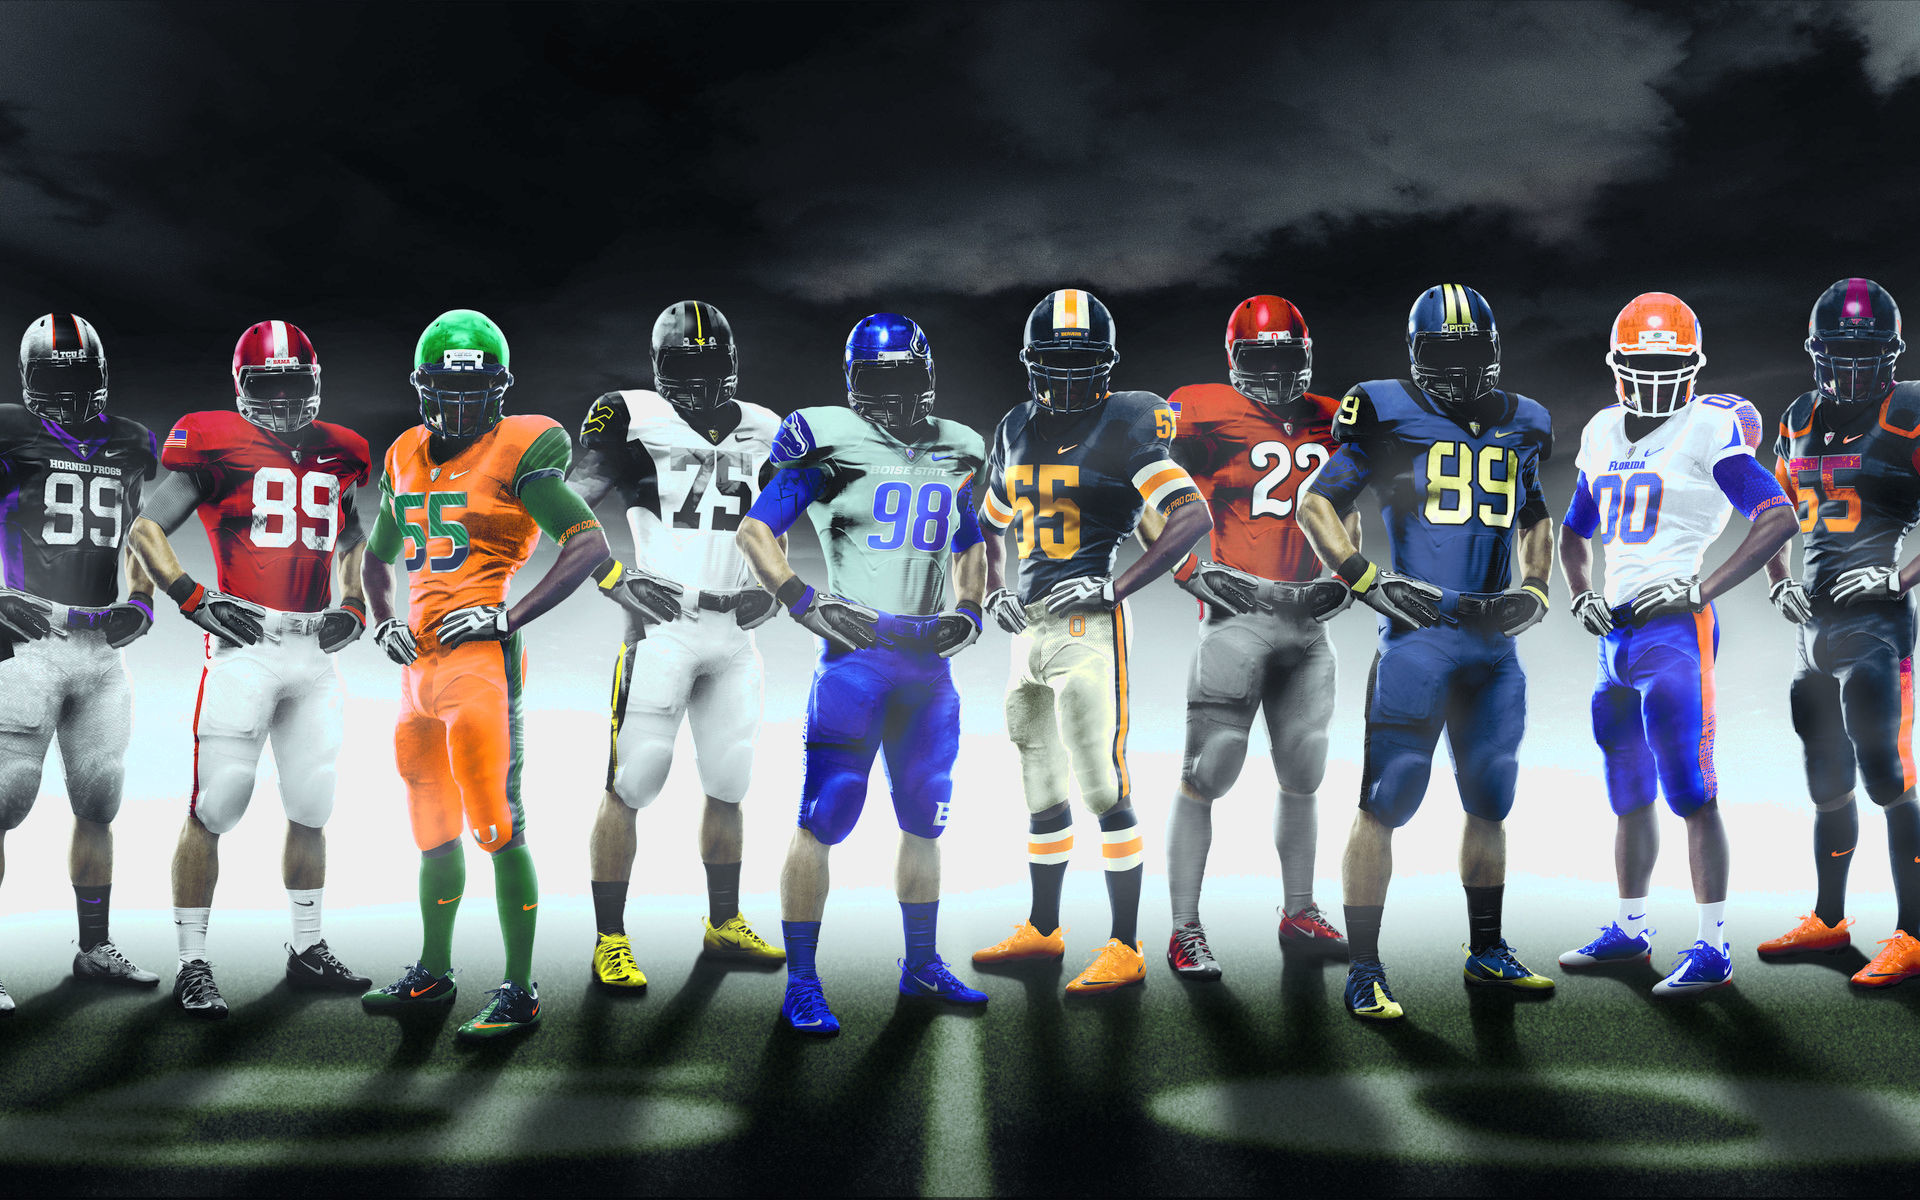 college football wallpaper,gridiron football,american football,team,football gear,super bowl